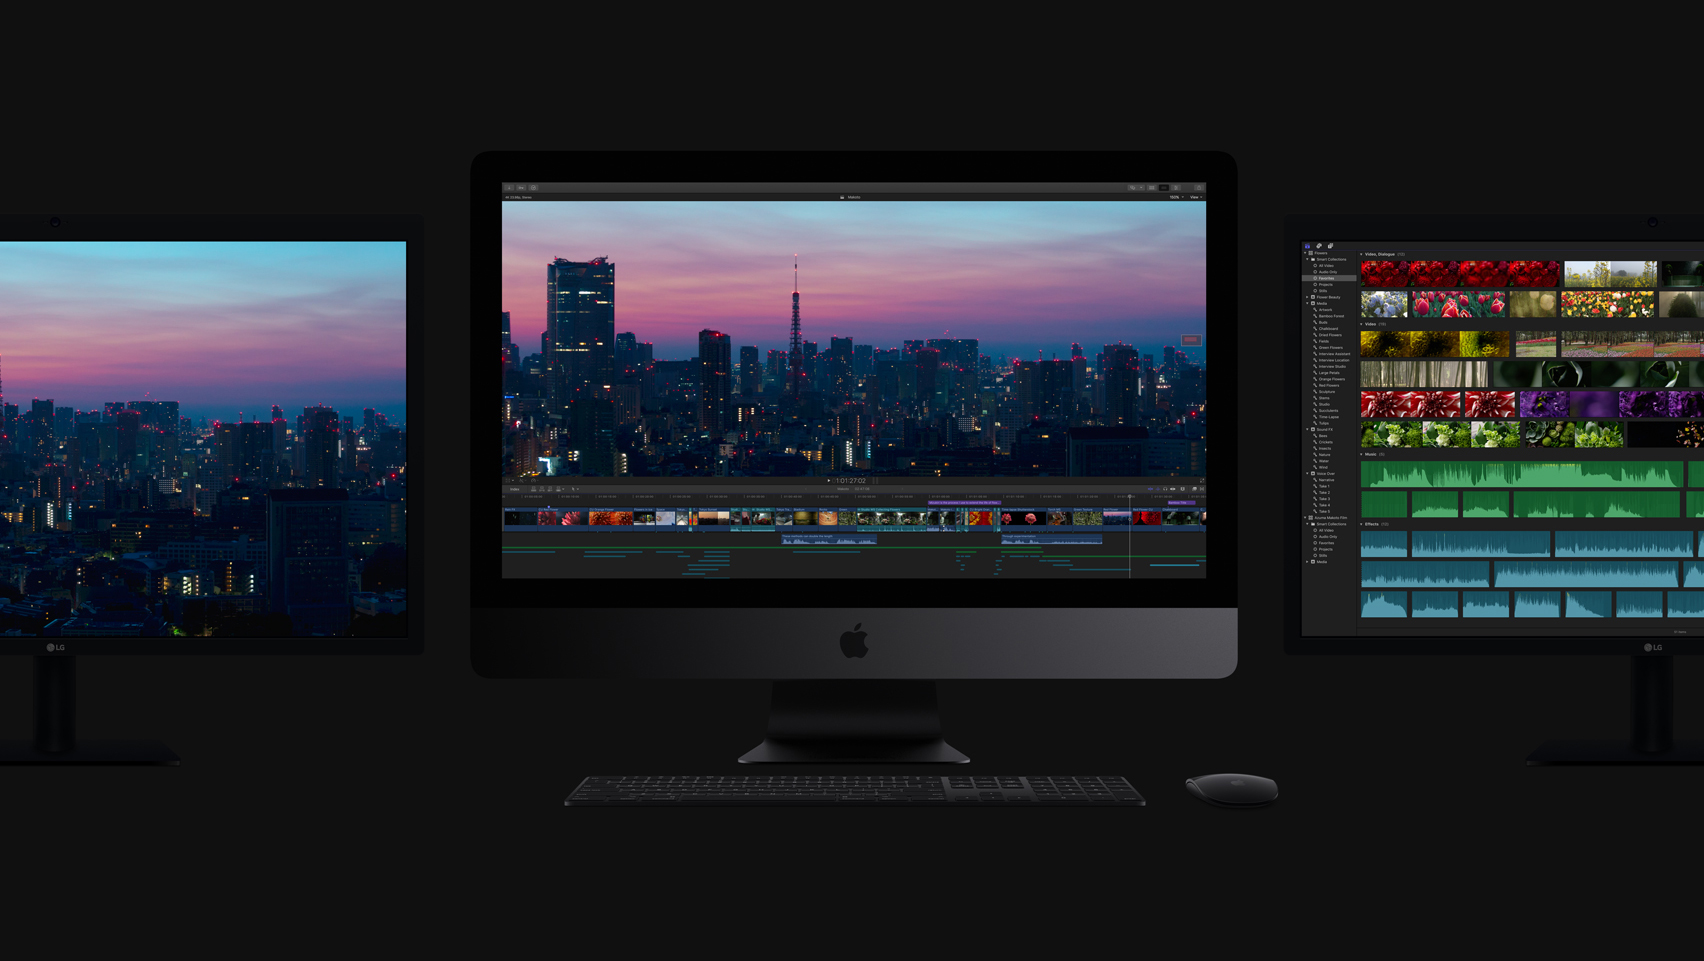 iMac Pro จะใช้ชิปประมวลผล Apple A10 Fusion ของ iPhone ด้วย